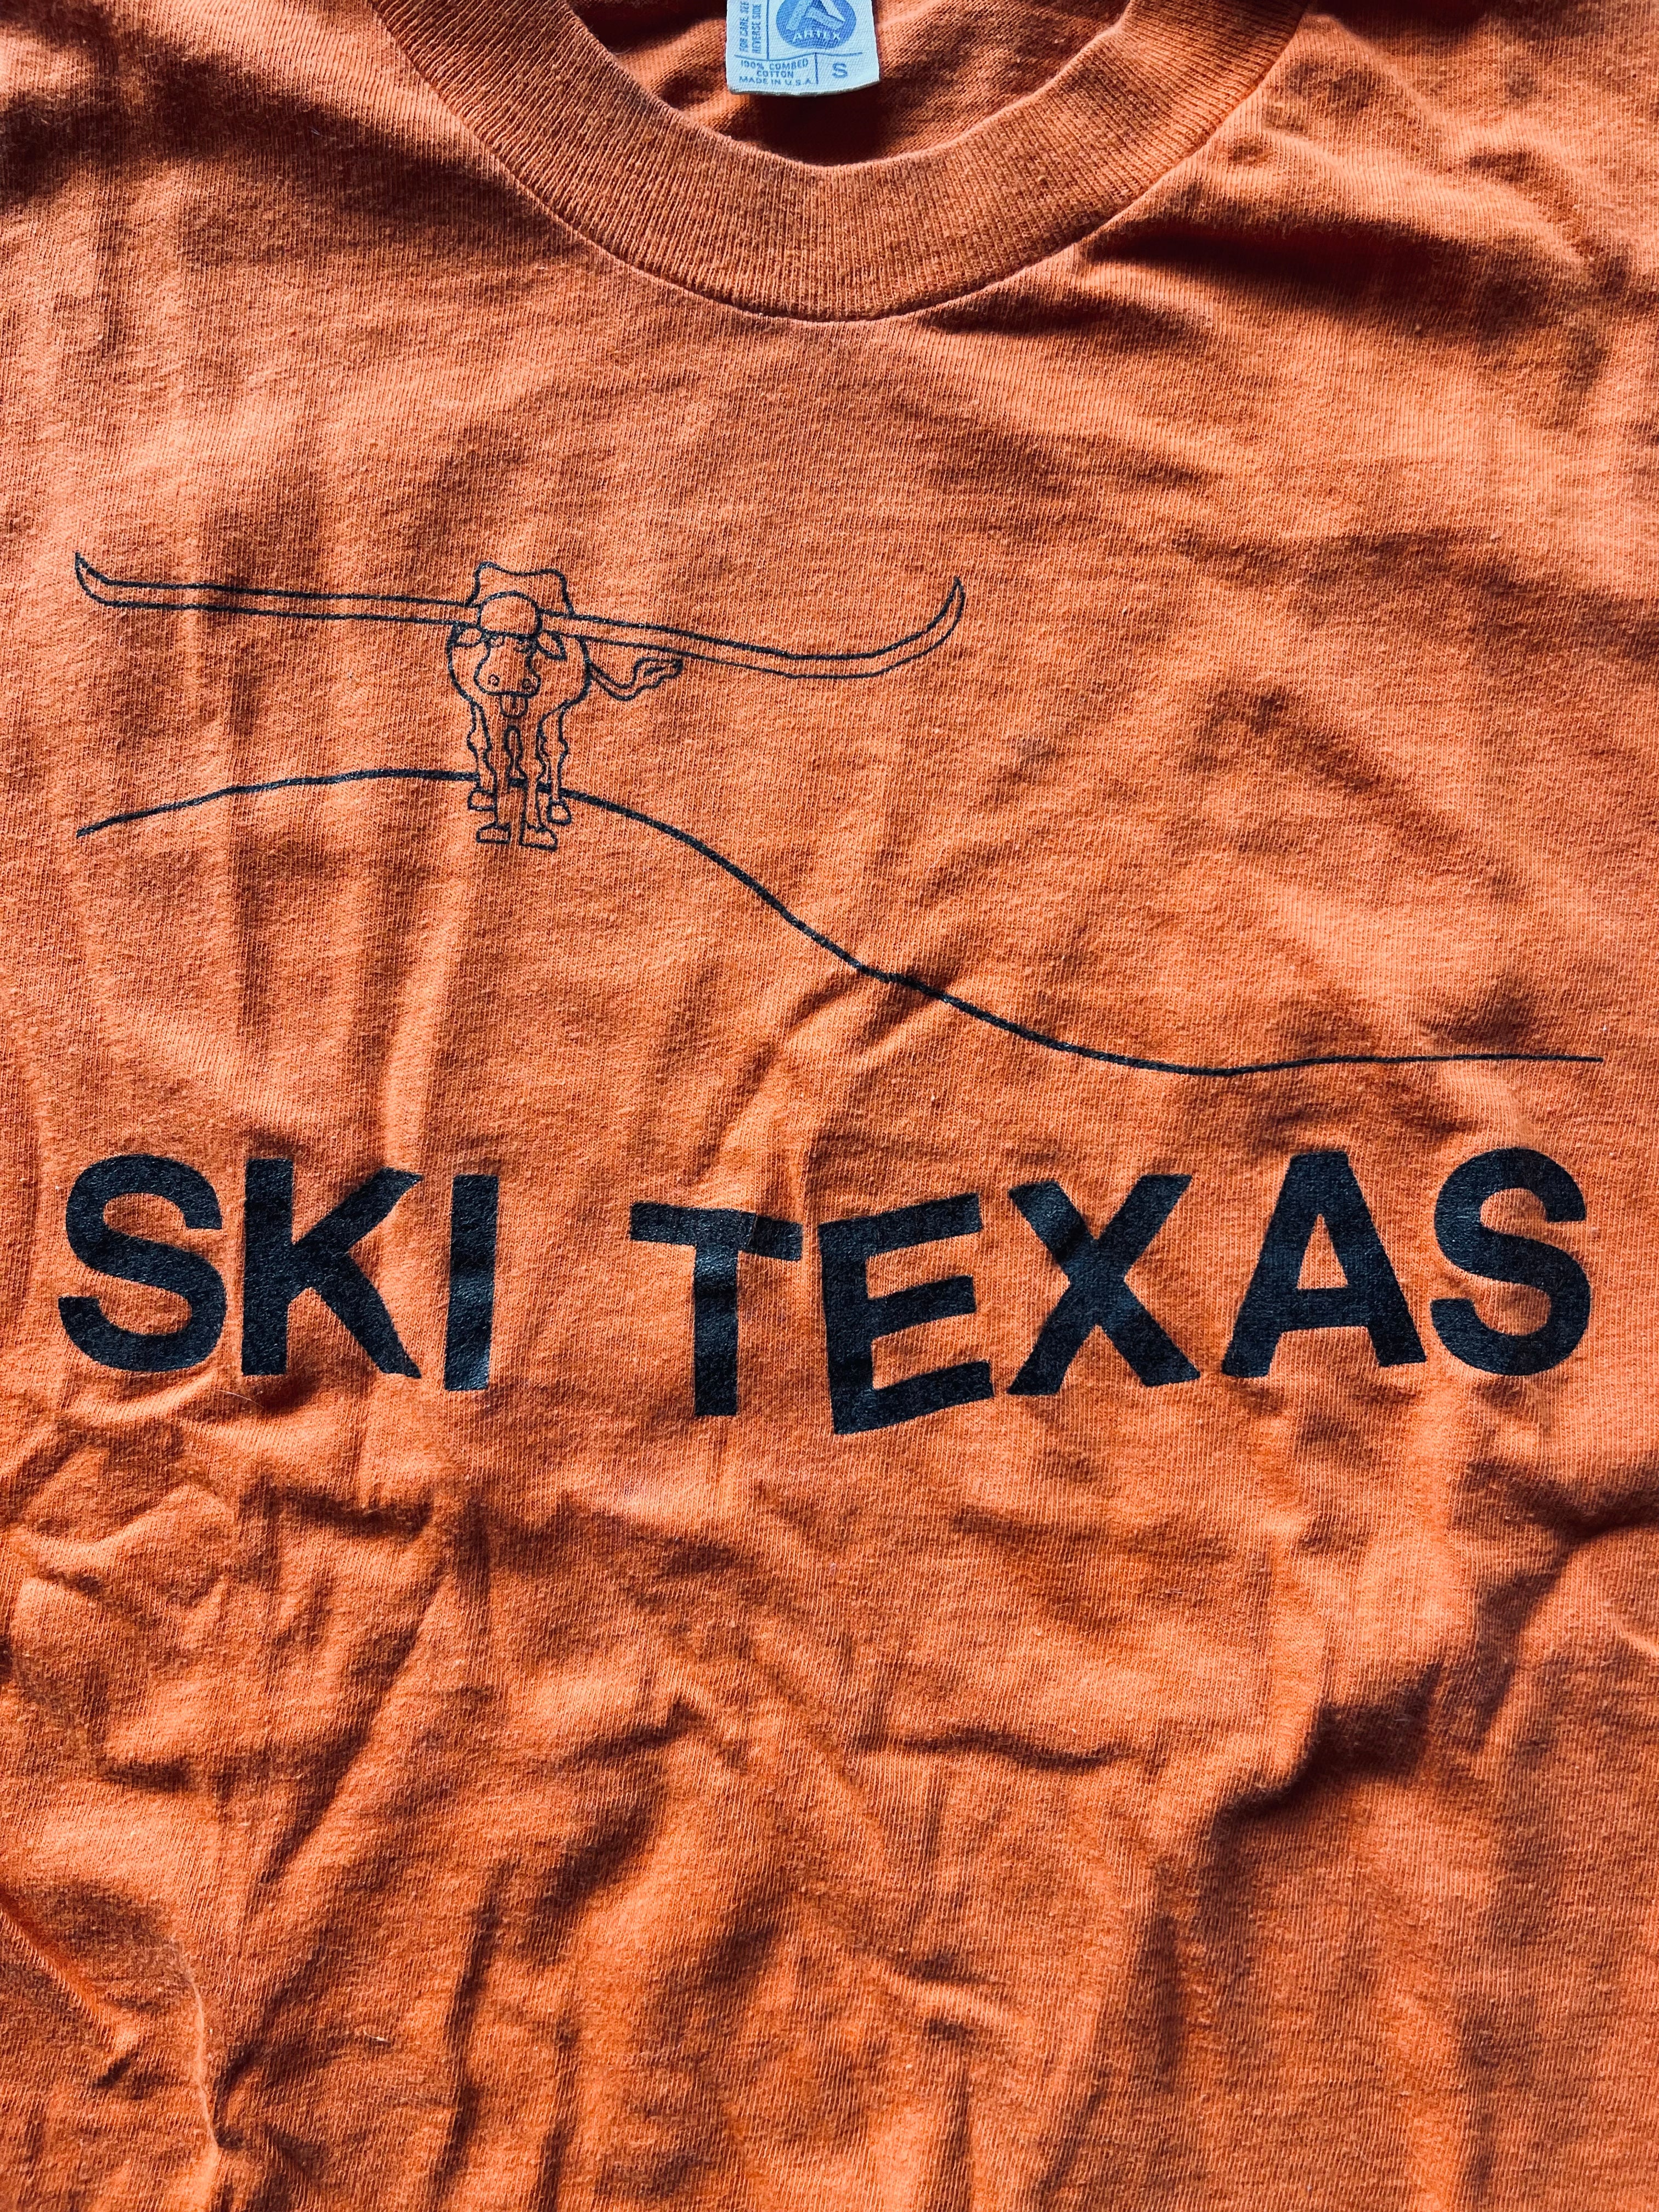 1970’s Artex “Ski Texas” Novelty Tee | Small